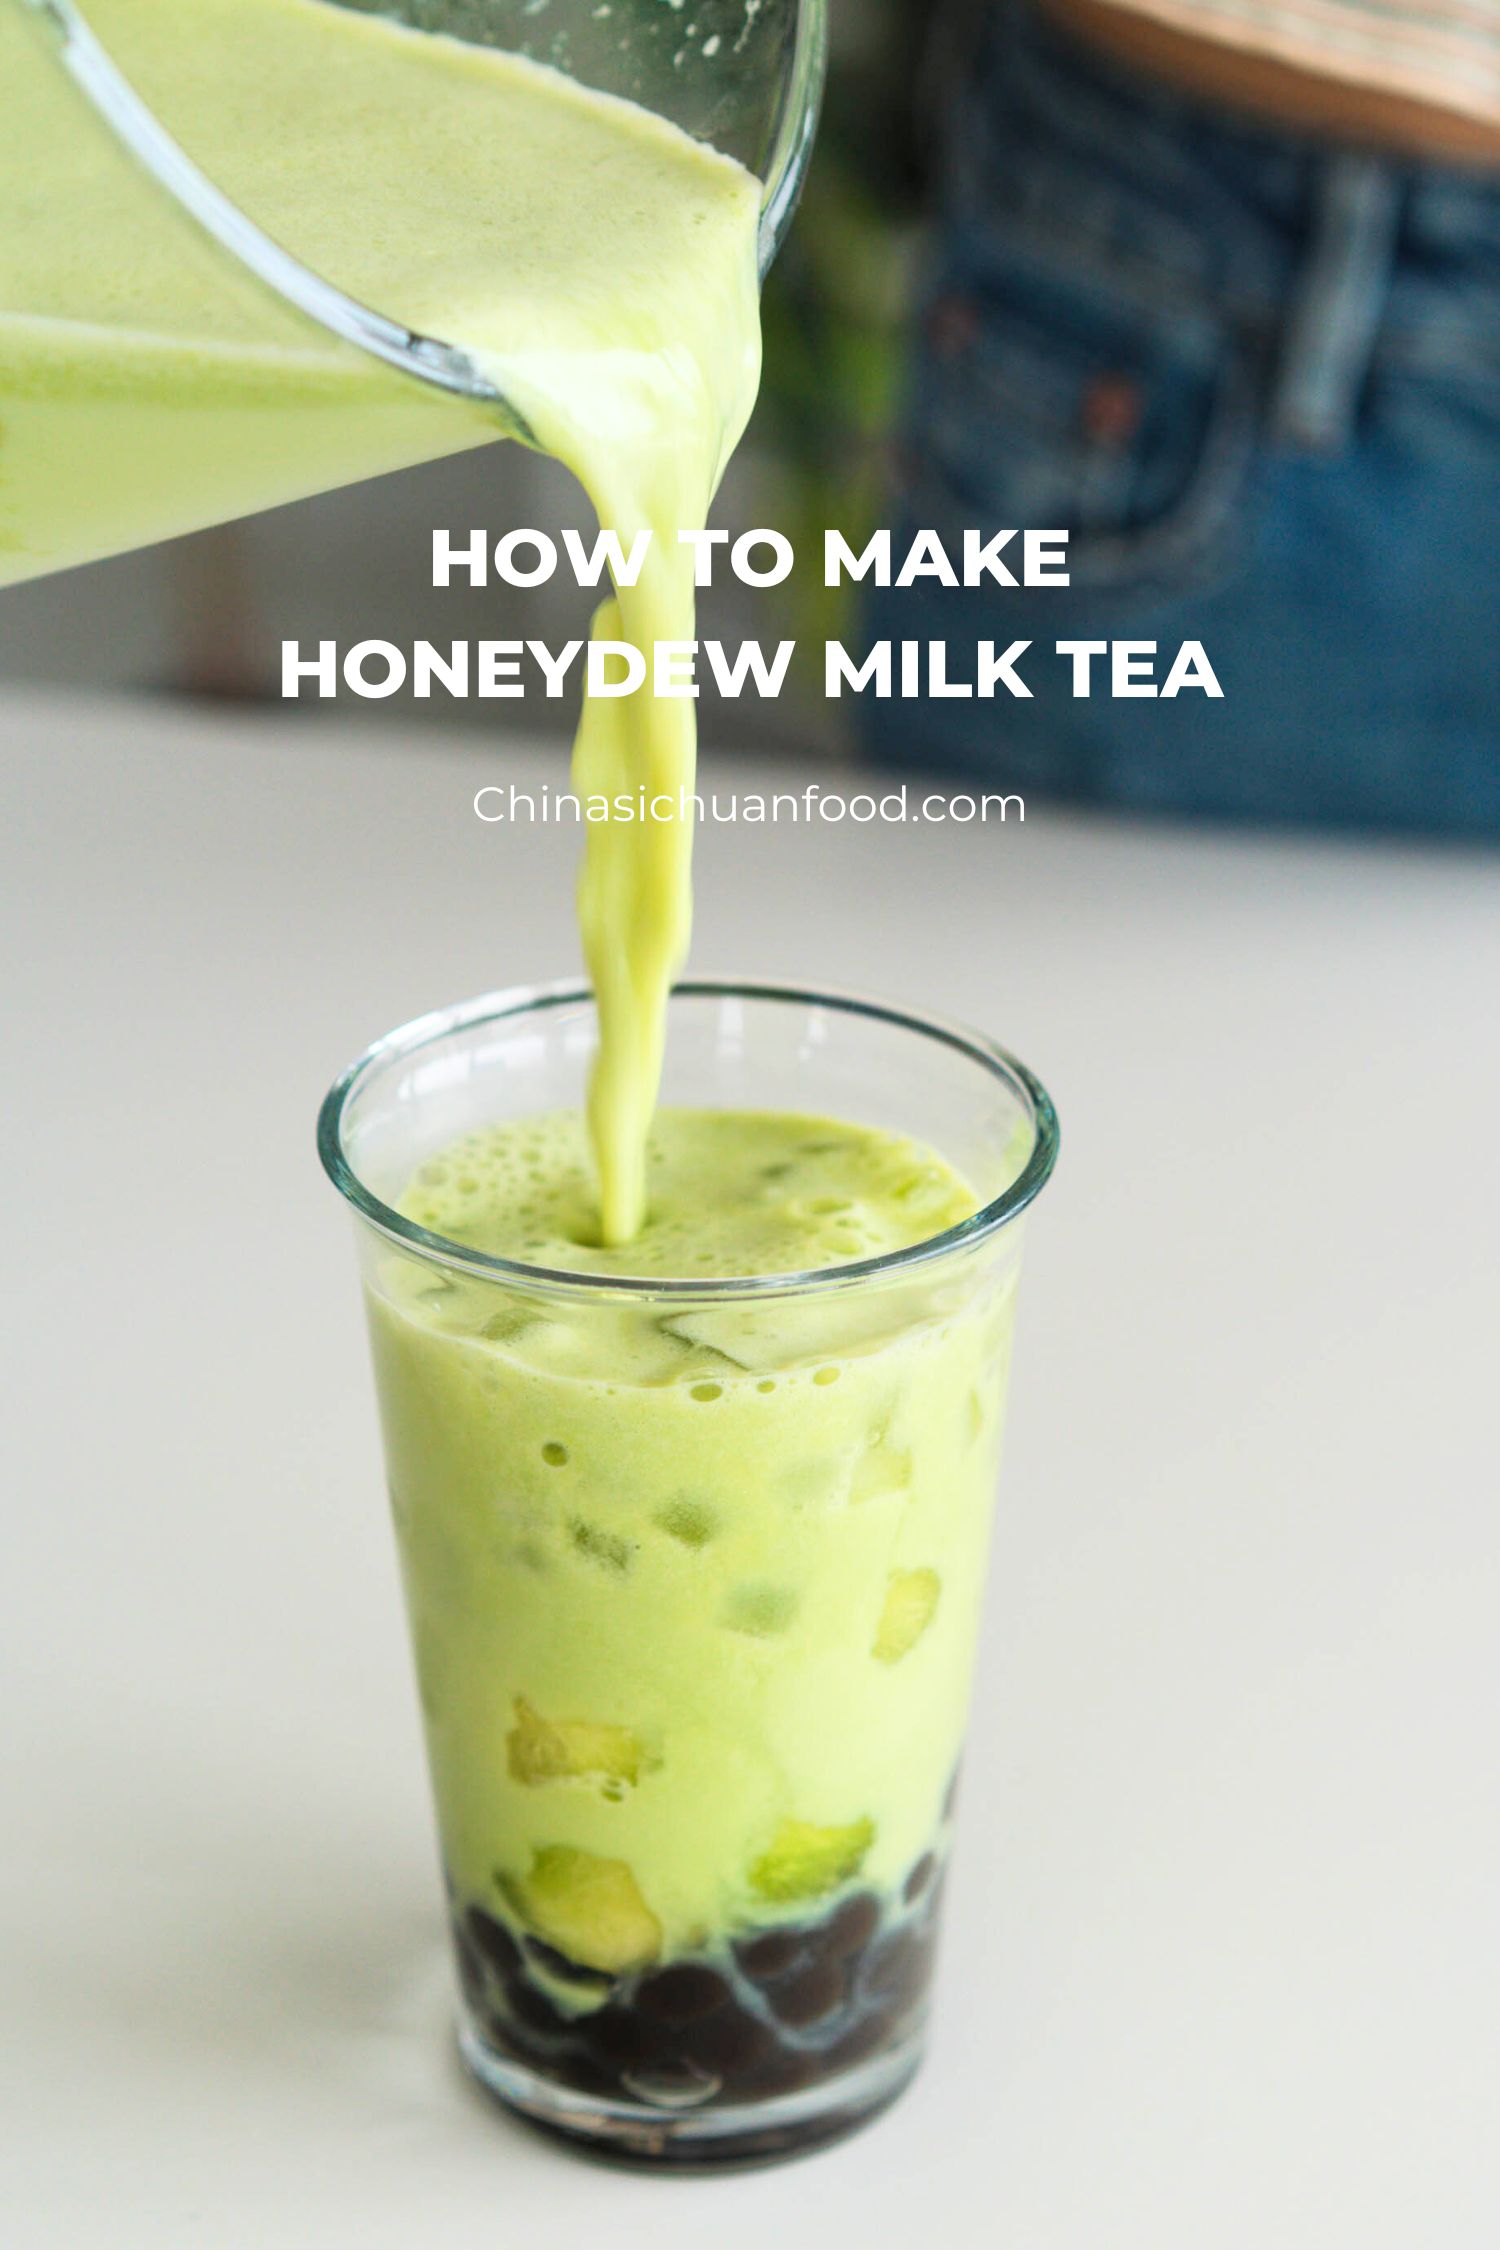 how to make honeydew milk tea|chinasichuanfood.com